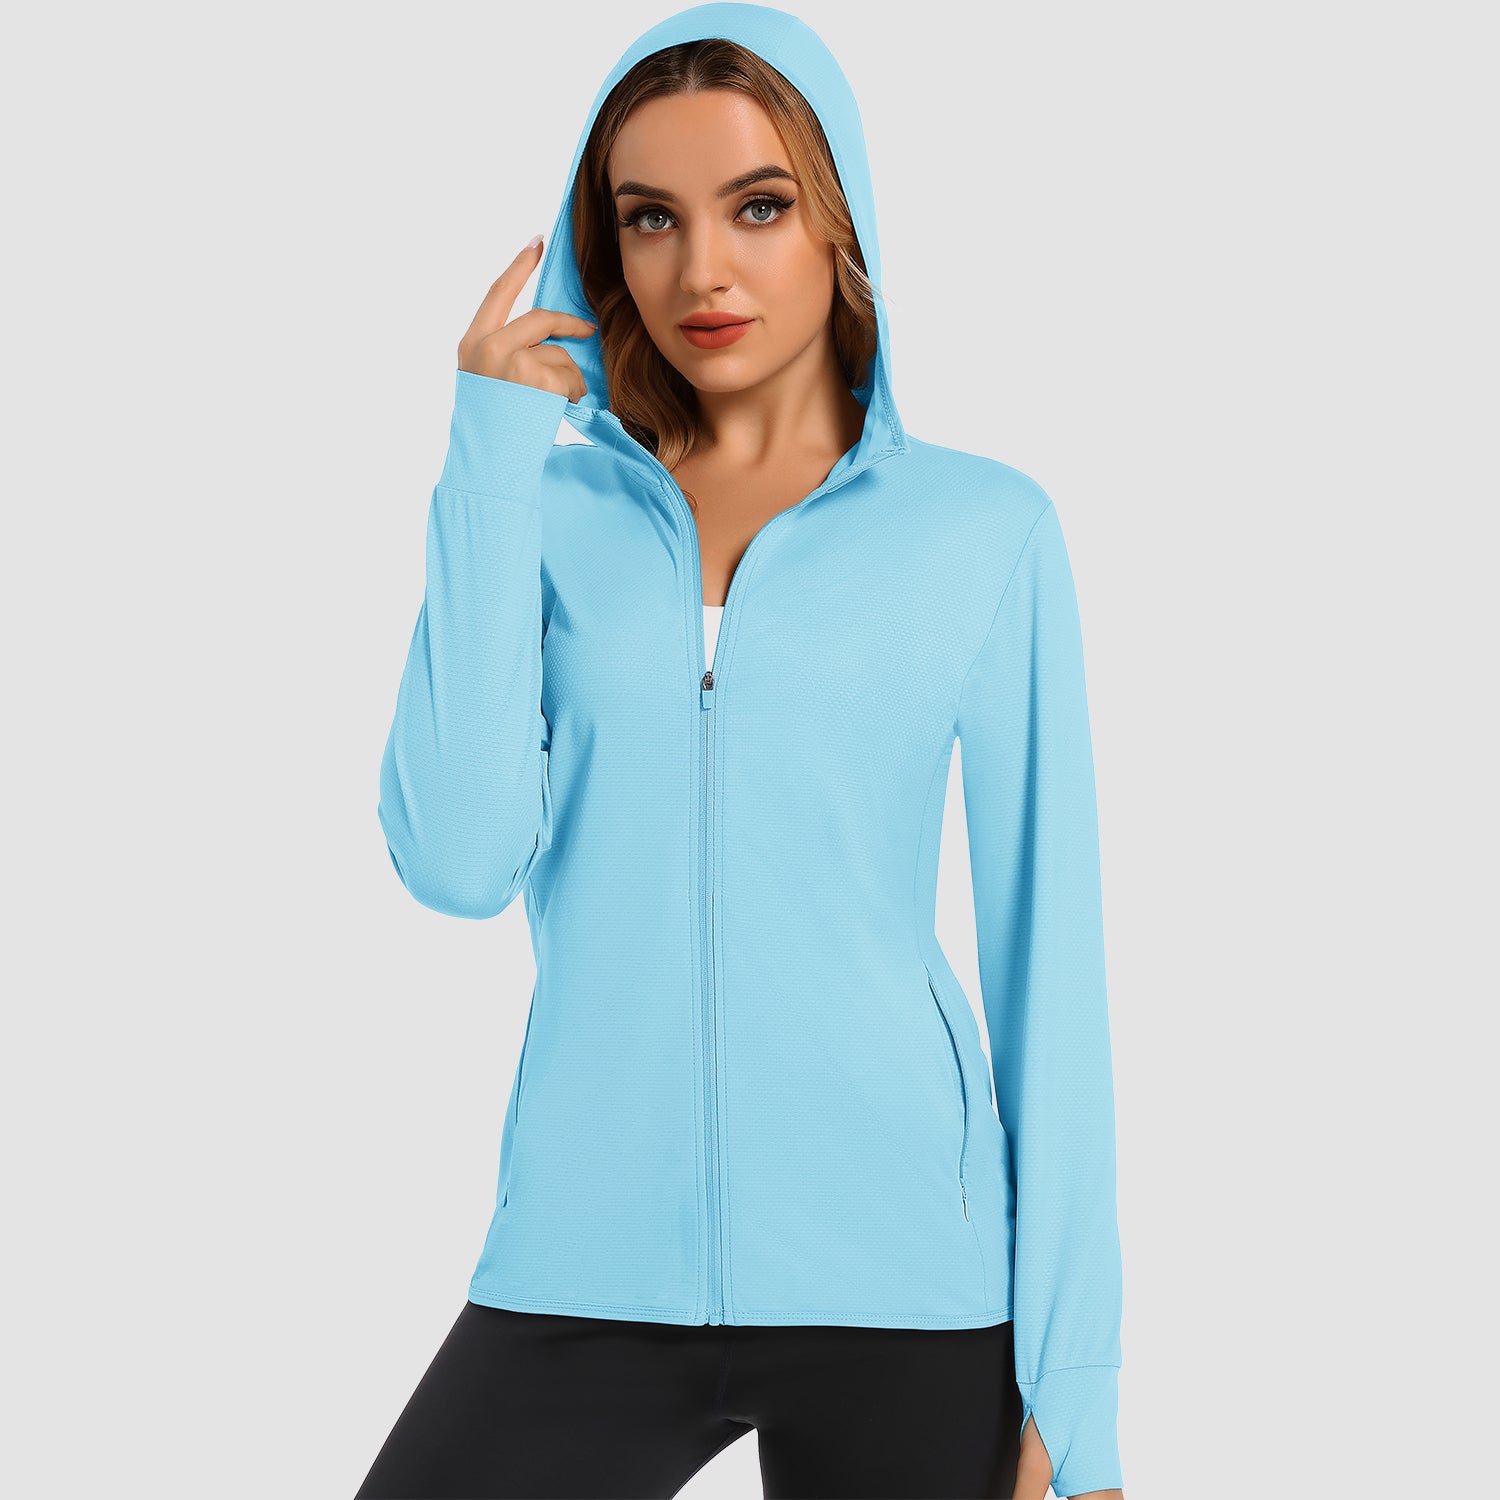 Women's UV Sun Protection Coat Shirts Long Sleeve Quick Dry Workout Hiking Athletic Jacket